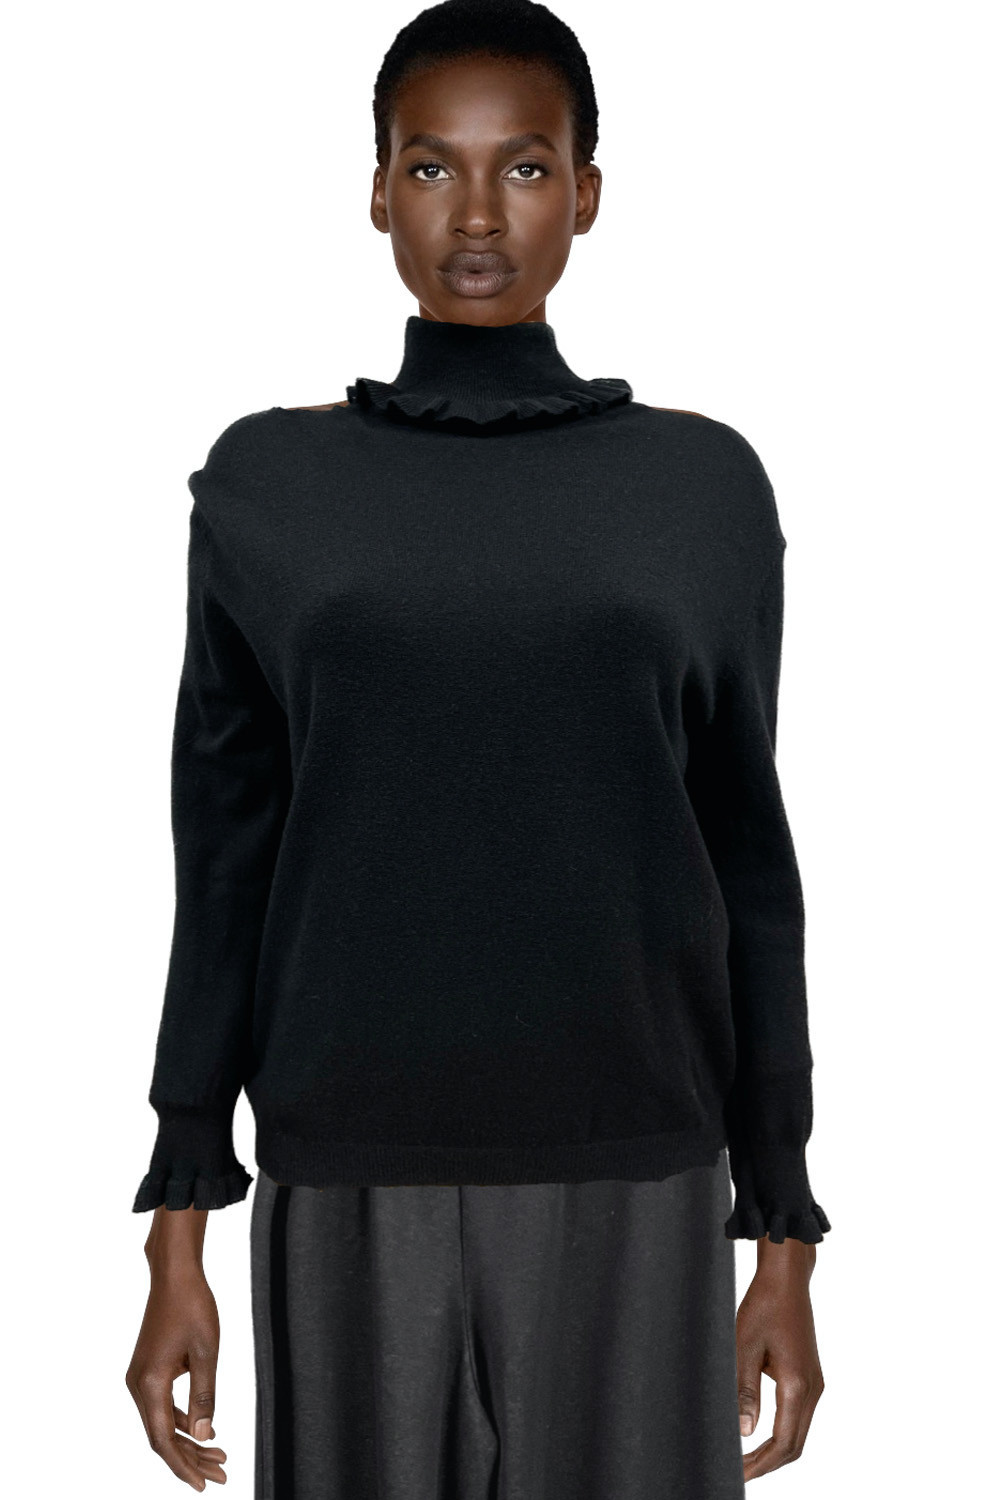 Slim black sweater